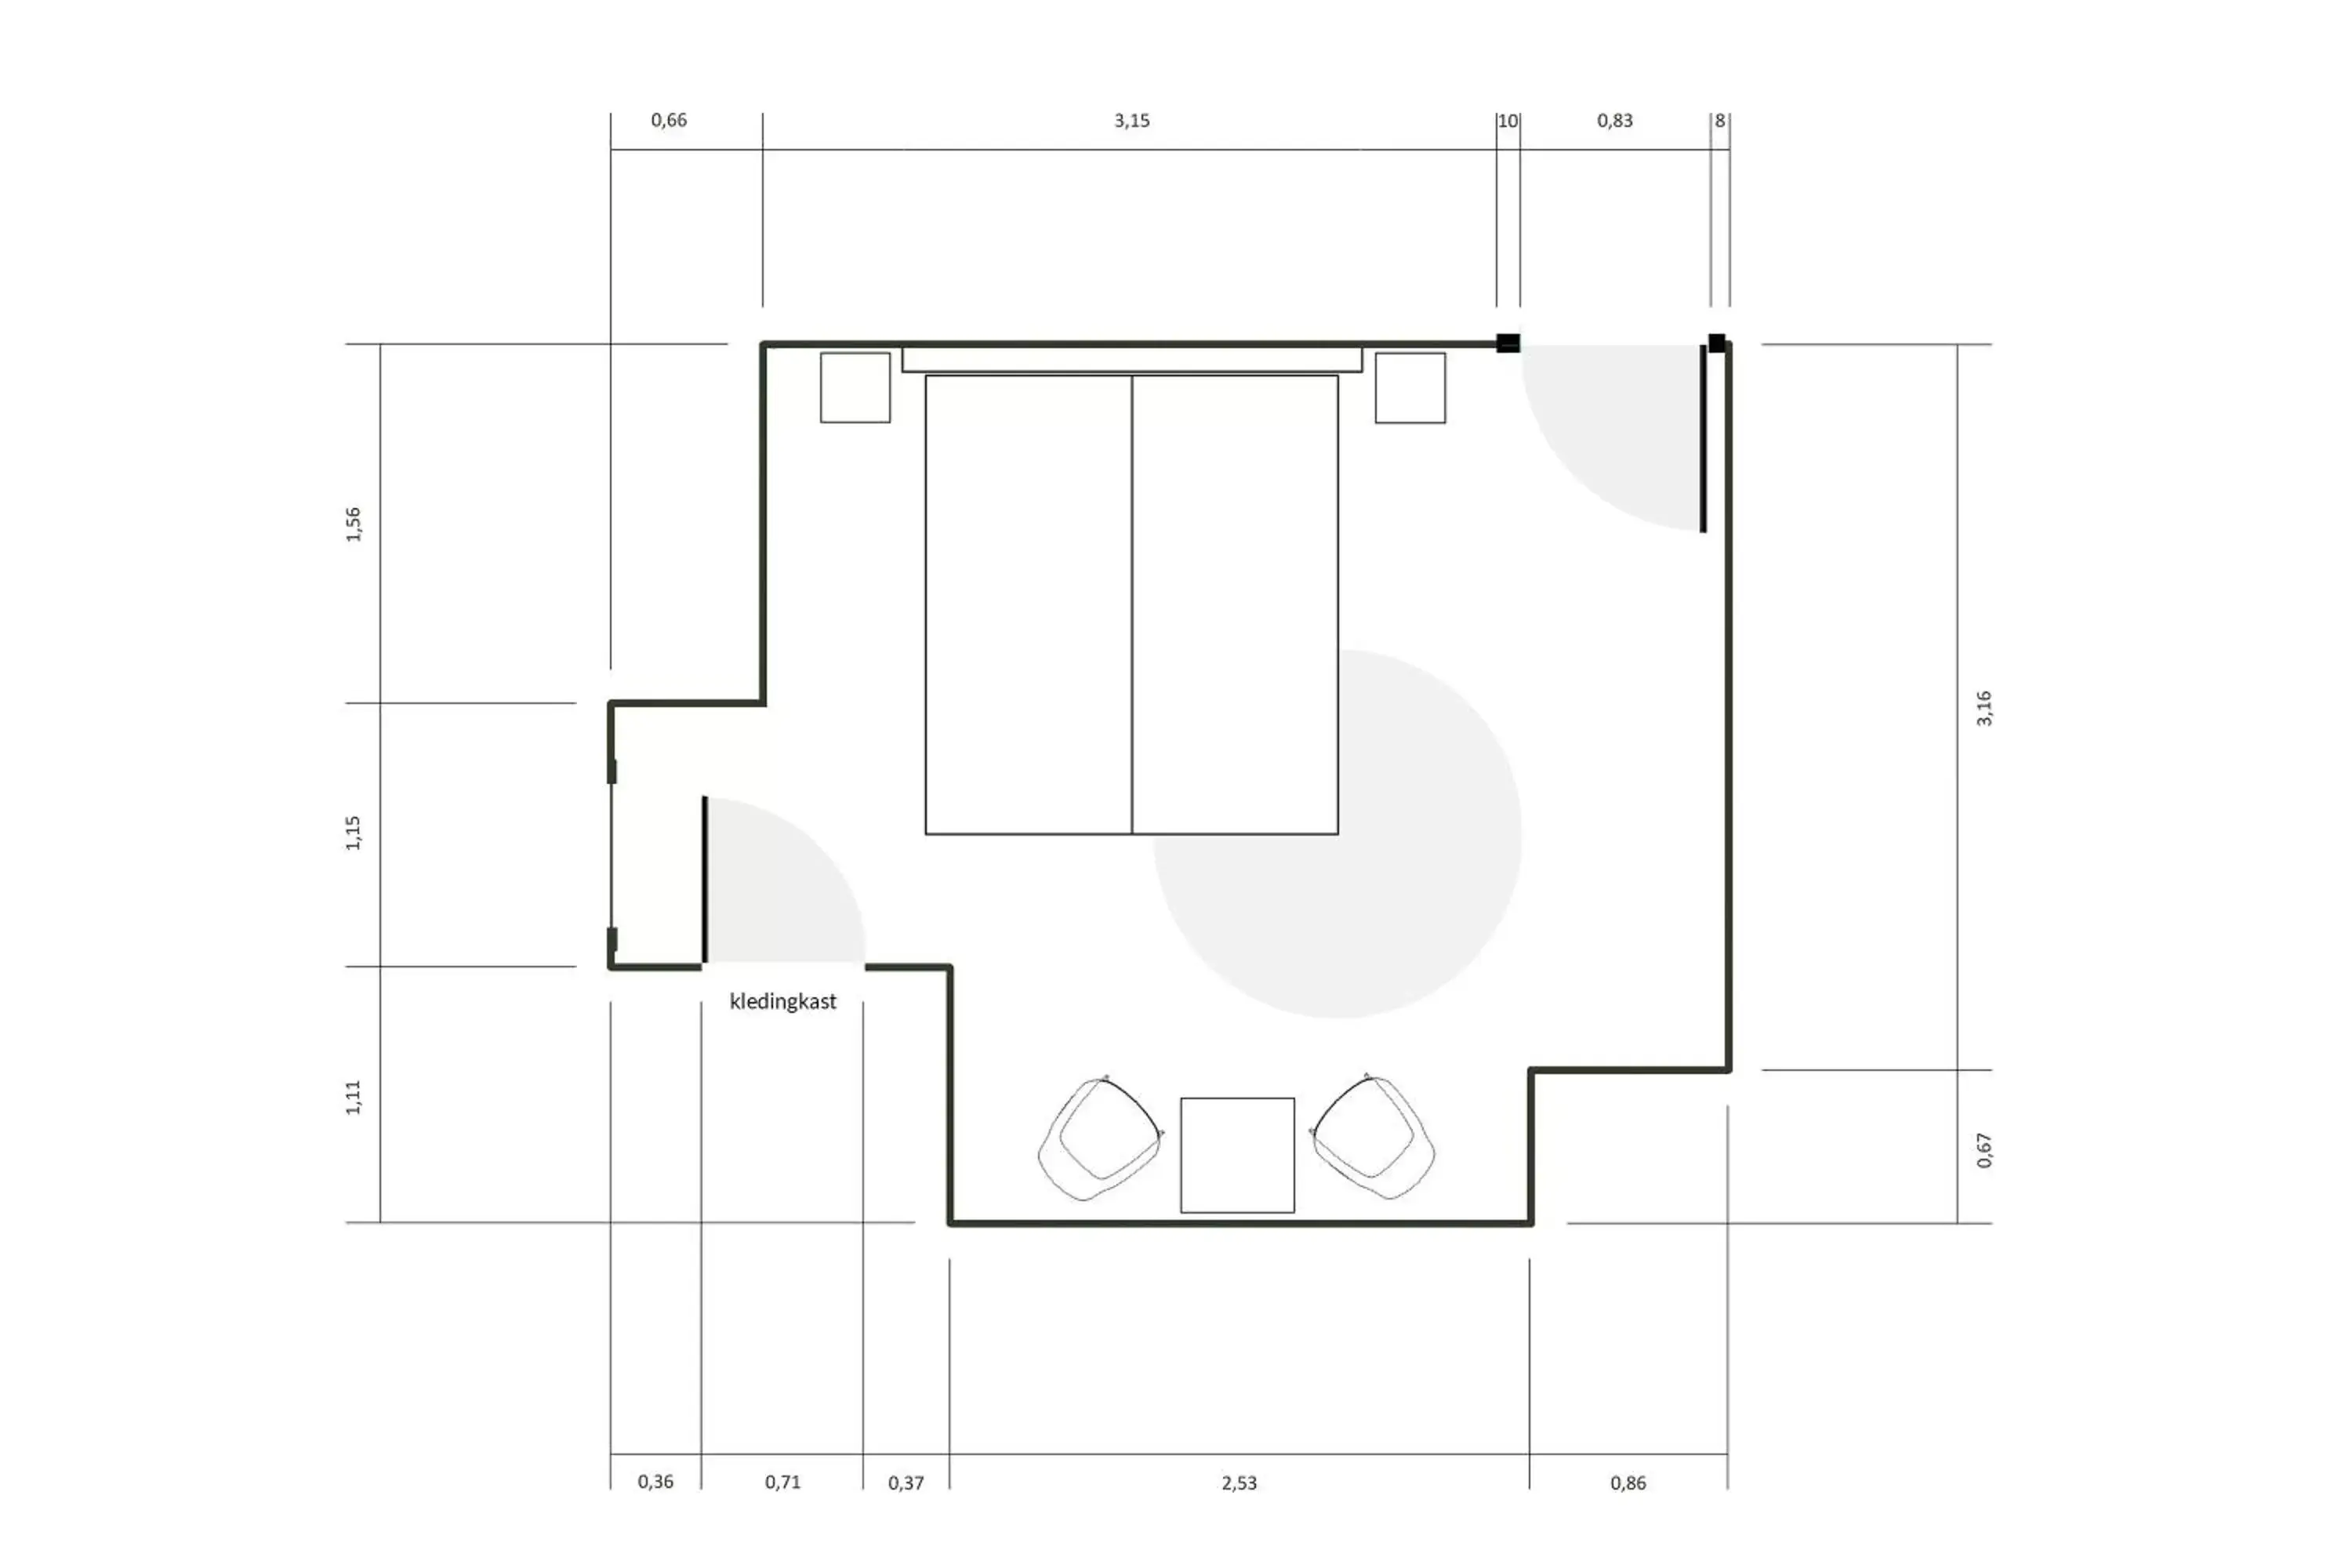 Floor Plan in Bed & Breakfast - Gallery 't Speelhuys